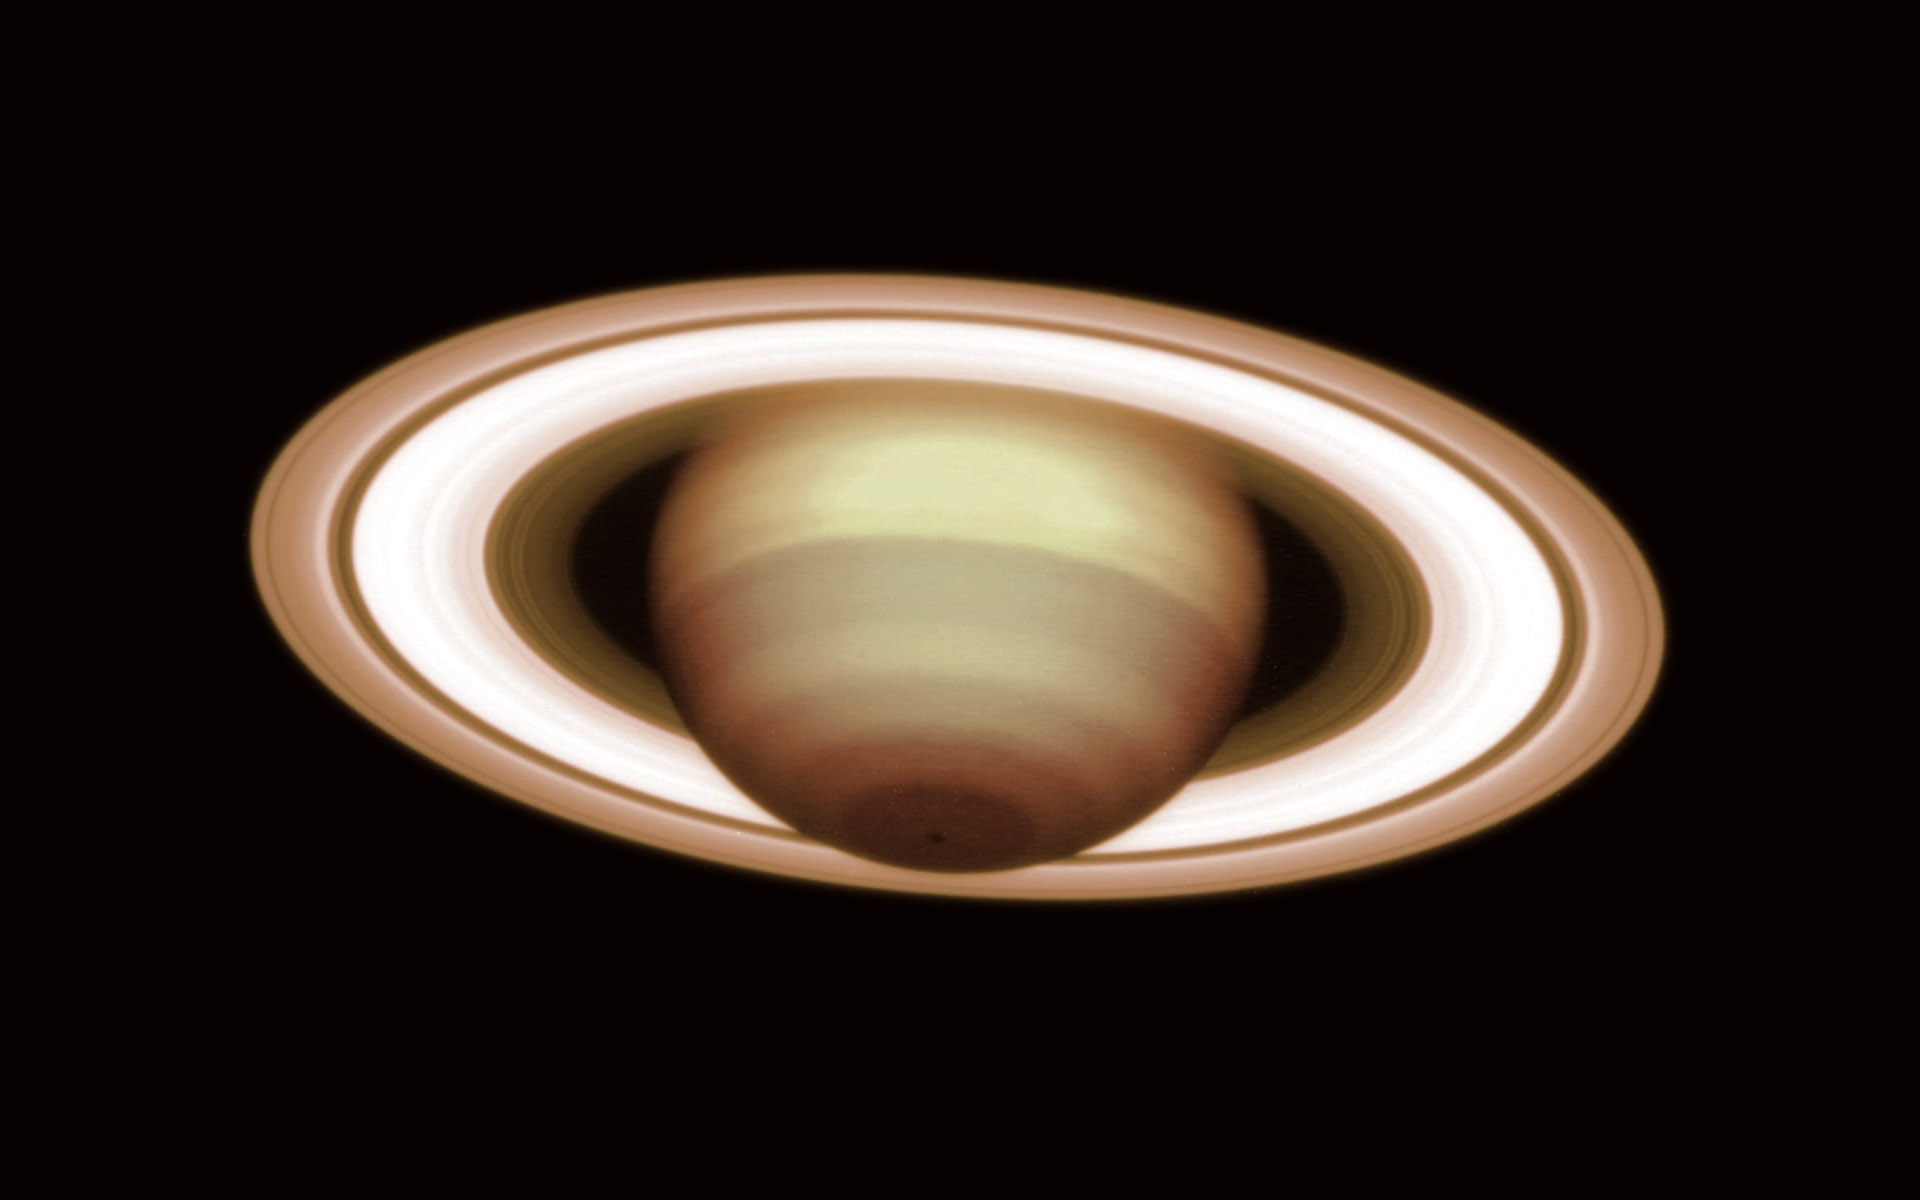 Rings Of Saturn Band